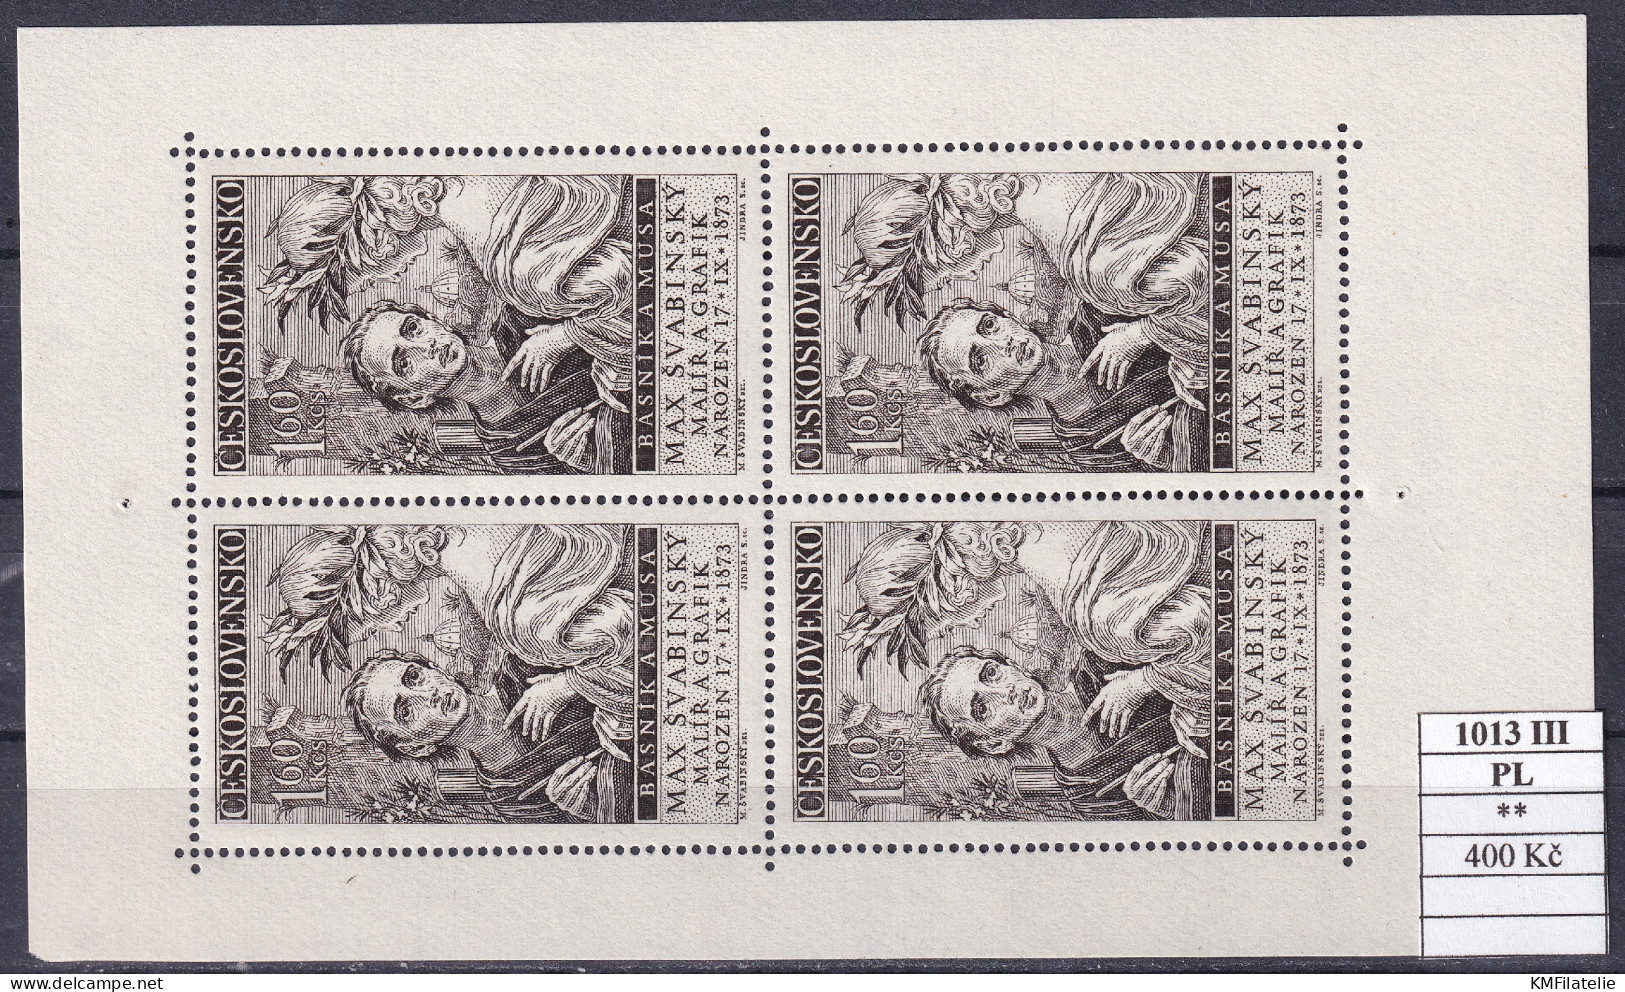 Czechoslovakia Pofis 1013 III PL MNH - Unused Stamps